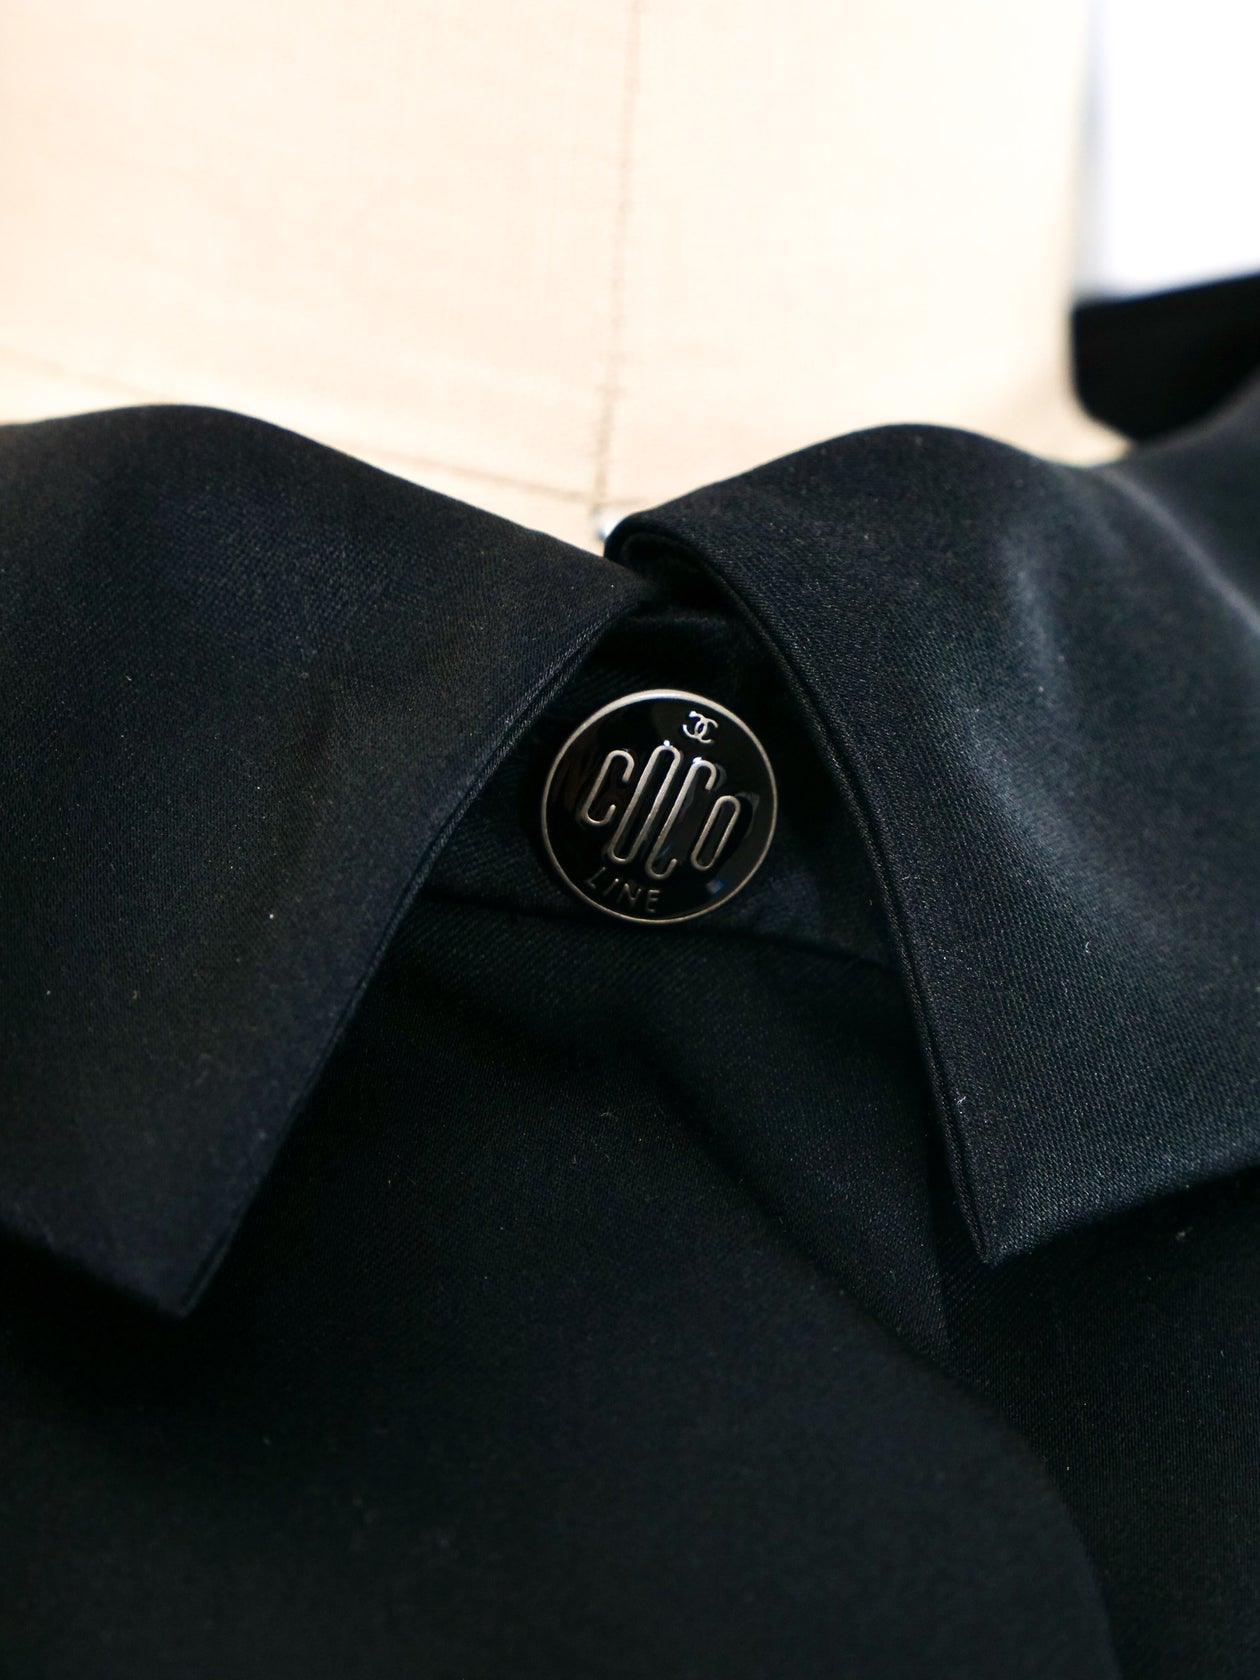 Chanel silk blouse - Gem